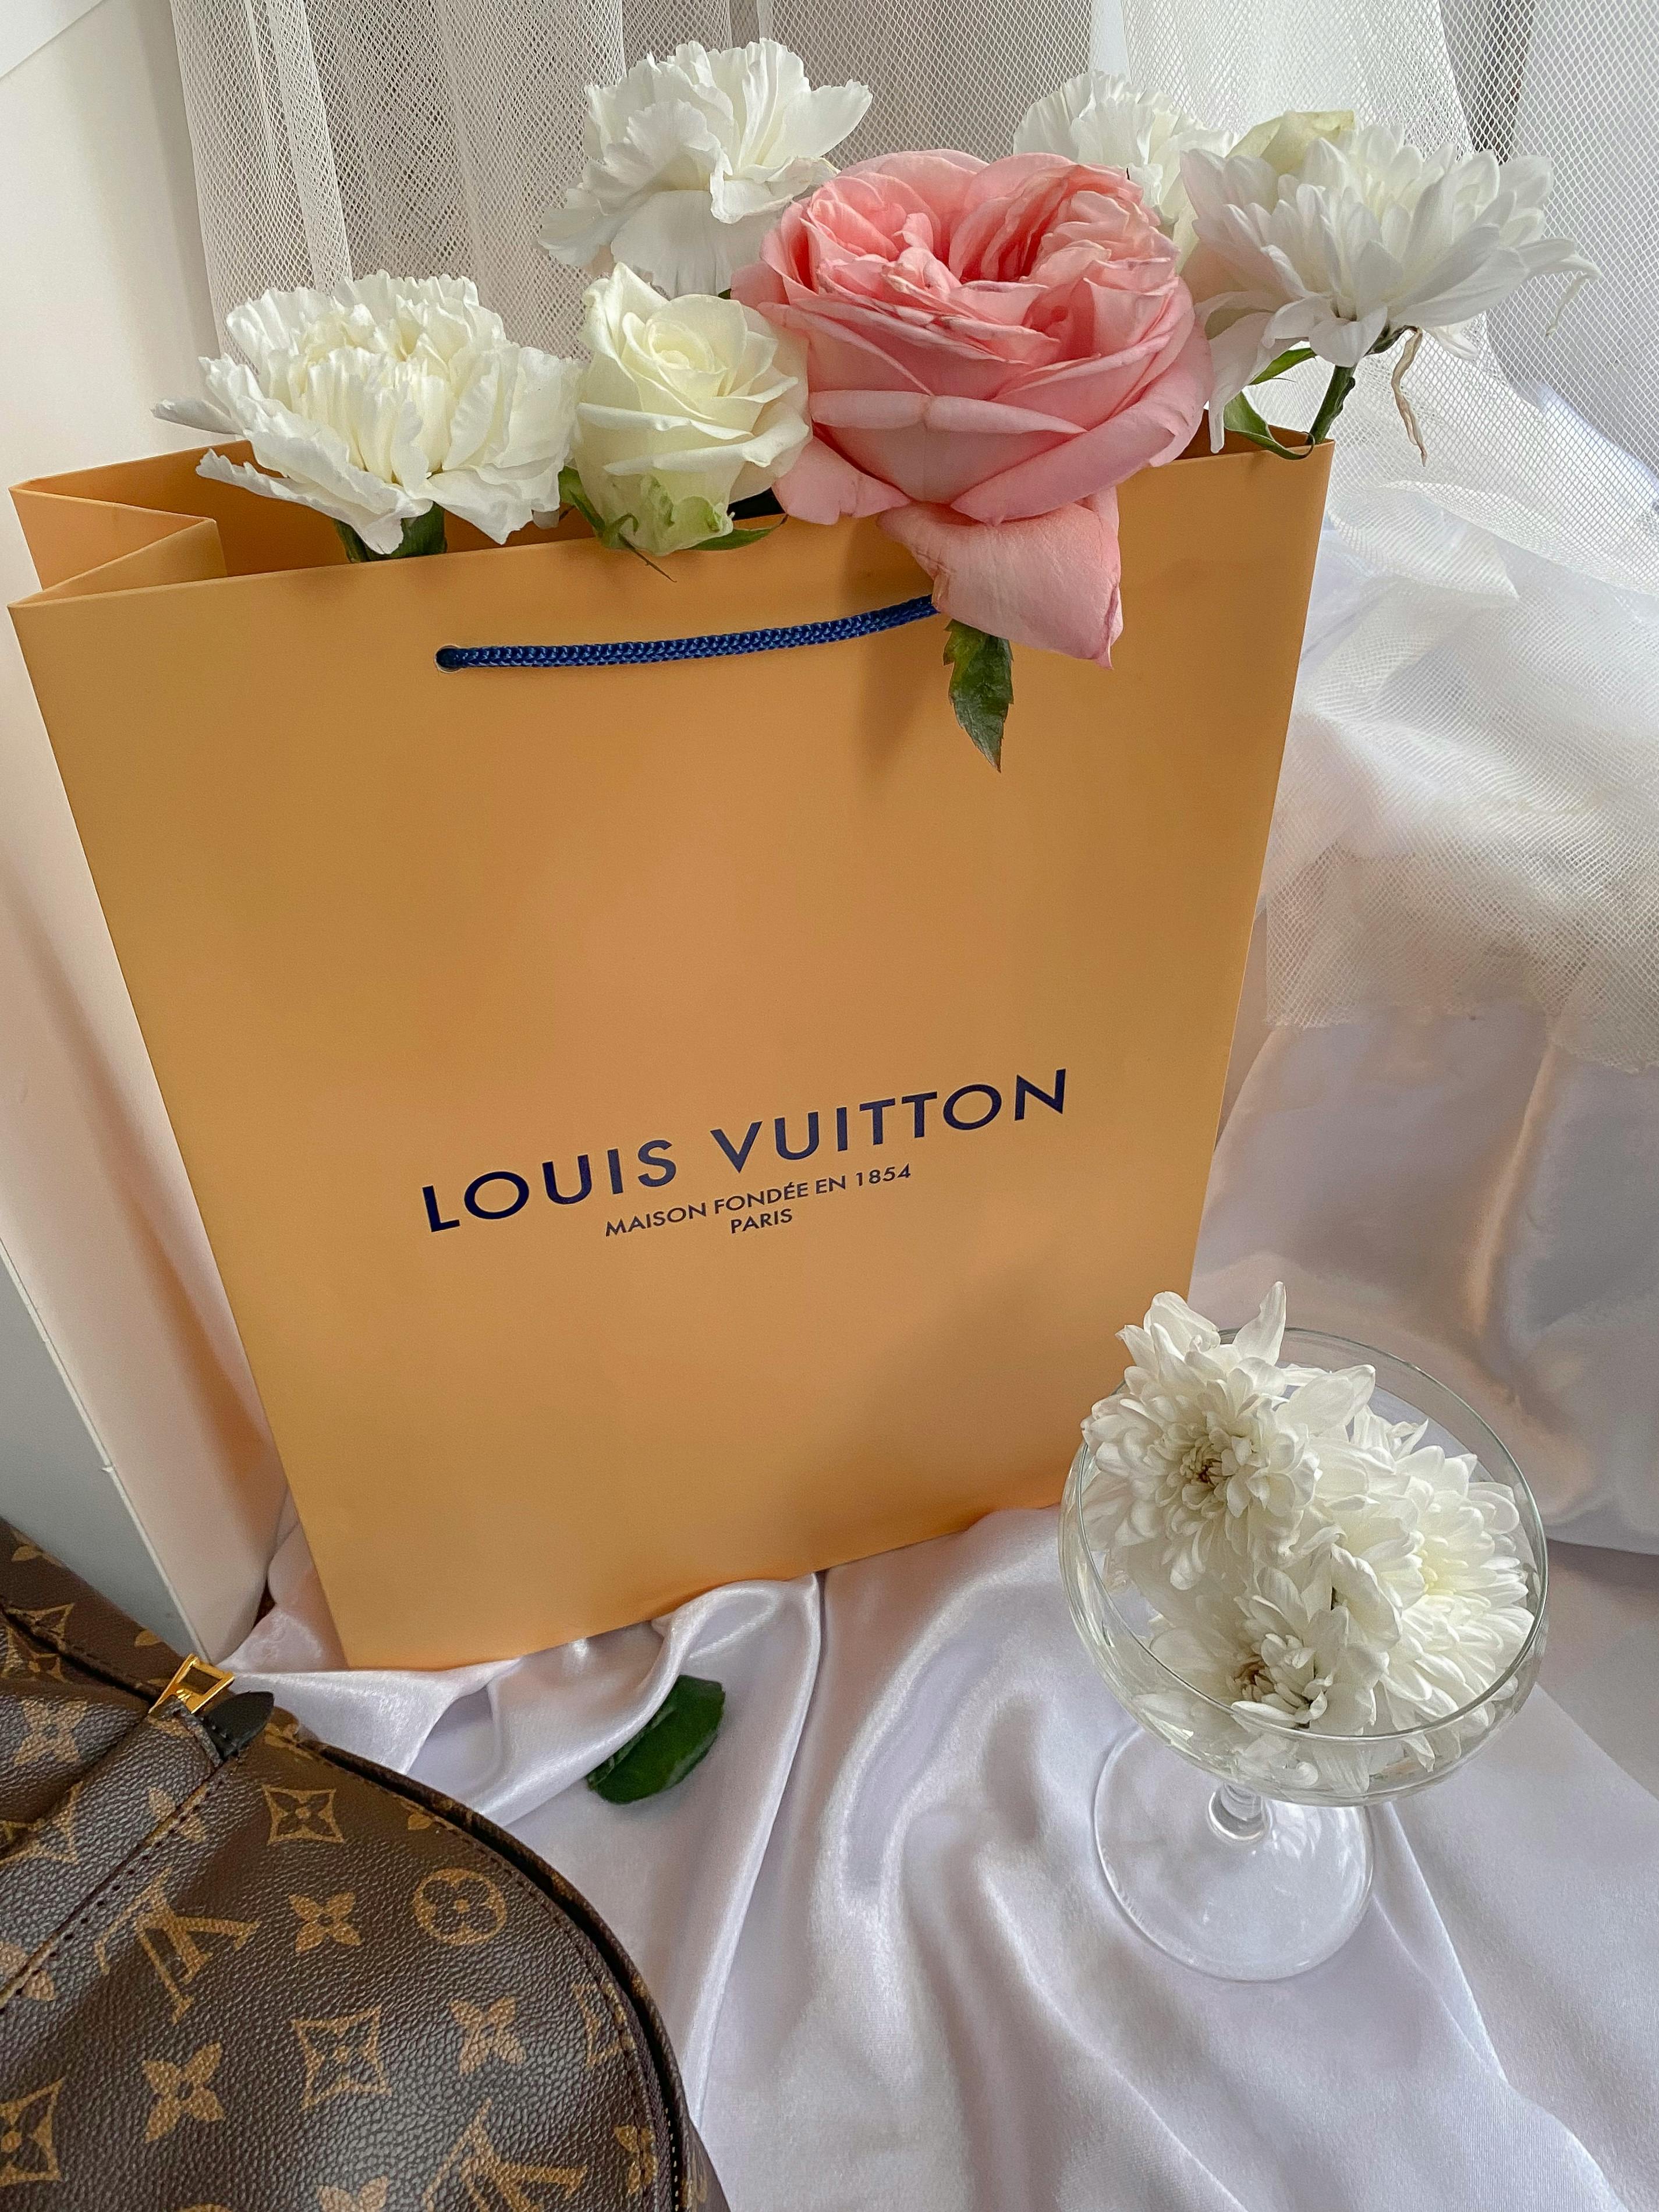 Luis Vuitton Photos, Download The BEST Free Luis Vuitton Stock